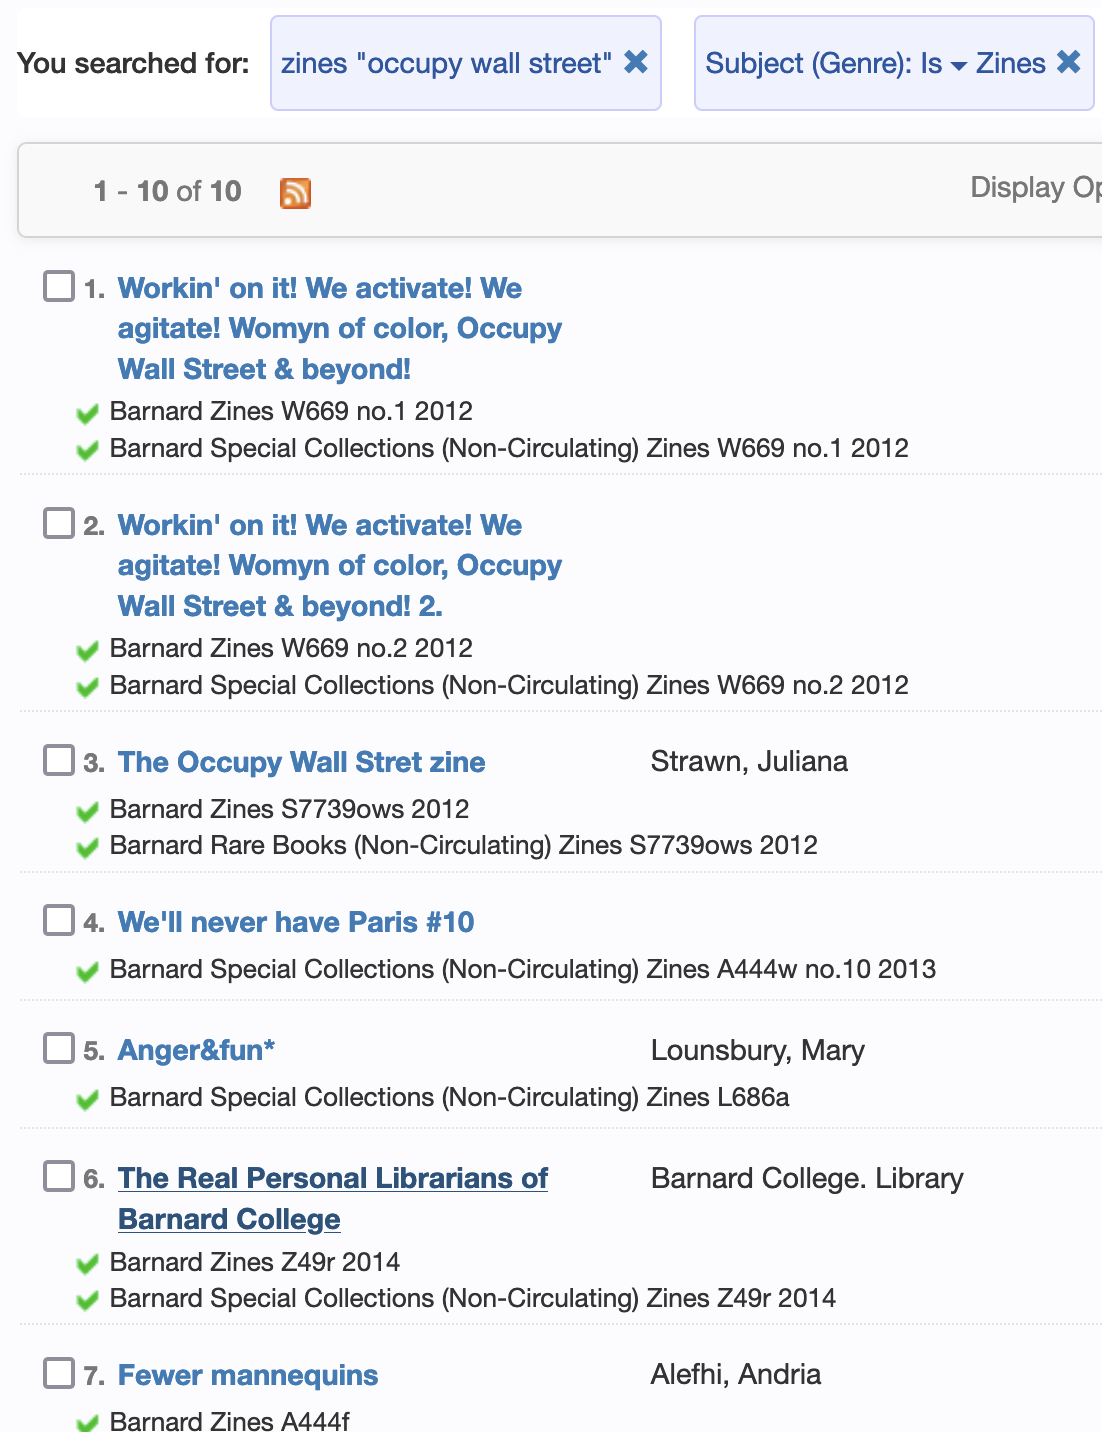 screenshot of CLIO results https://clio.columbia.edu/catalog?f%5B-format%5D%5B%5D=FOIA+Document&f%5Bsubject_form_facet%5D%5B%5D=Zines&q=zines+%22occupy+wall+street%22&search_field=all_fields